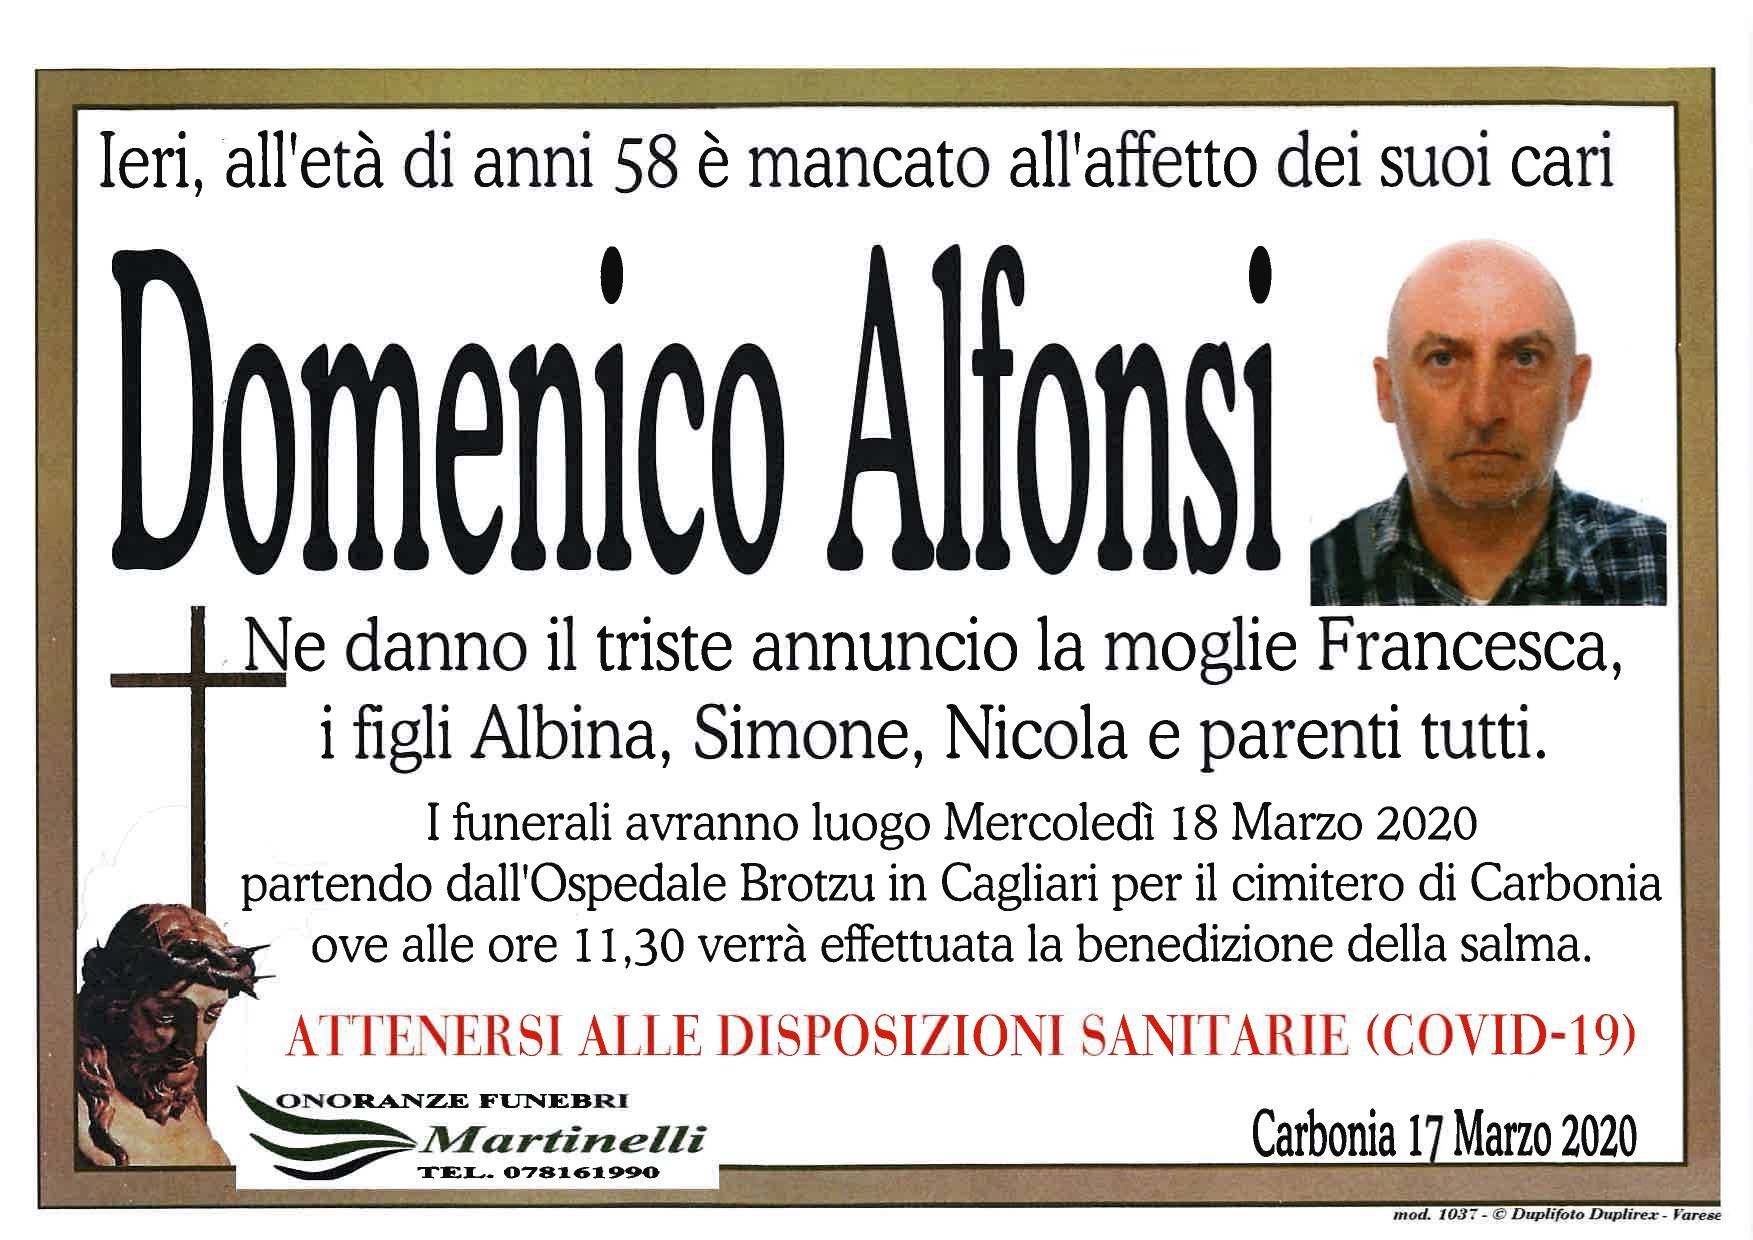 Domenico Alfonsi